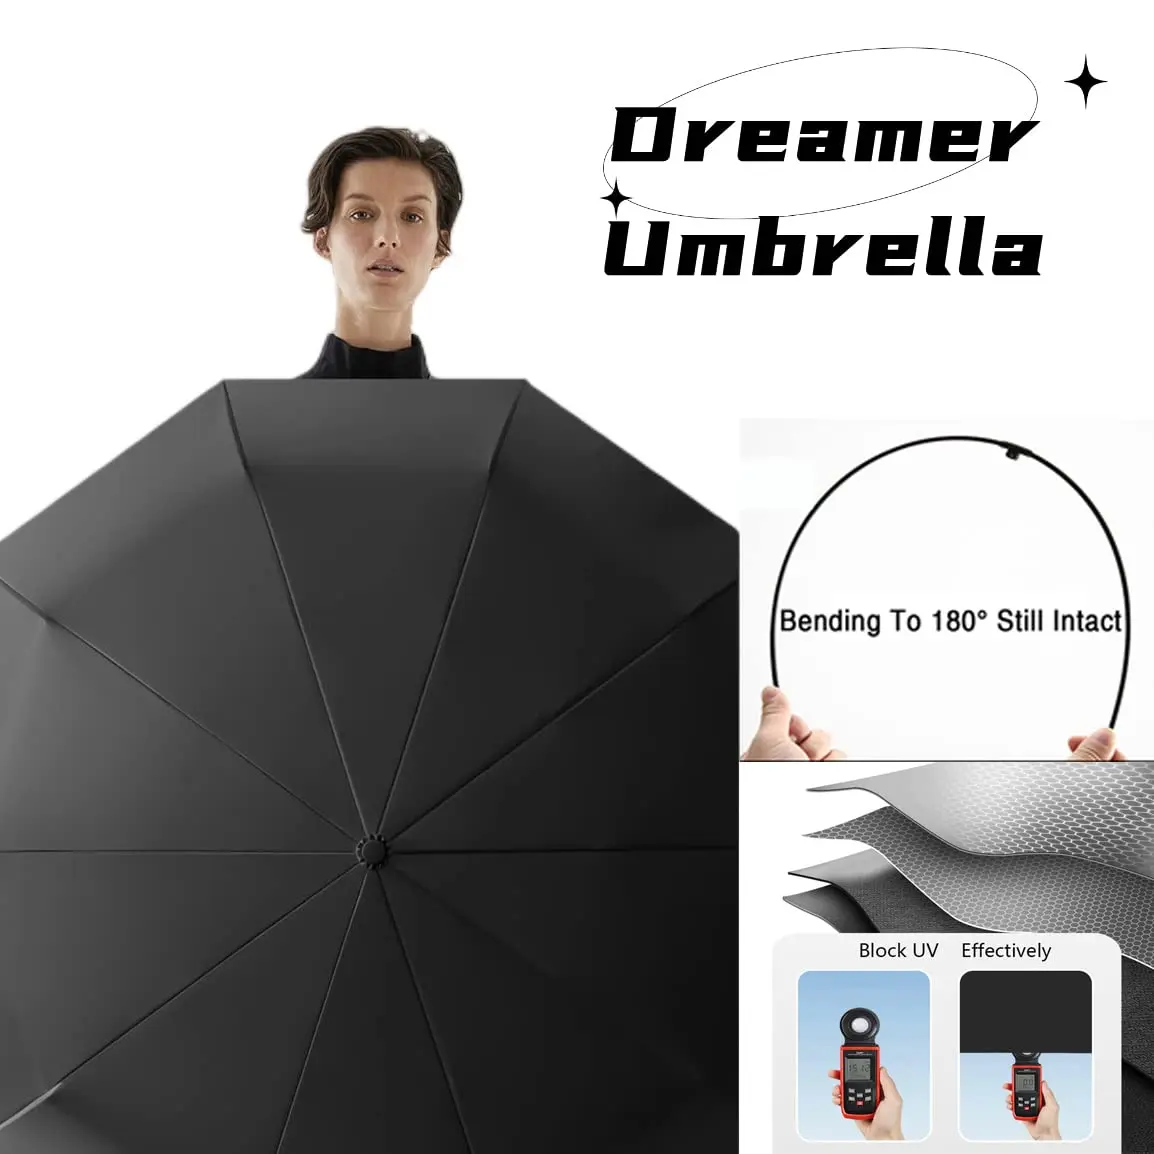 High quality paraguas para la lluvia UV Folding Sun Protection Ergonomic Handle with Umbrella with logo anti wind umbrella custo